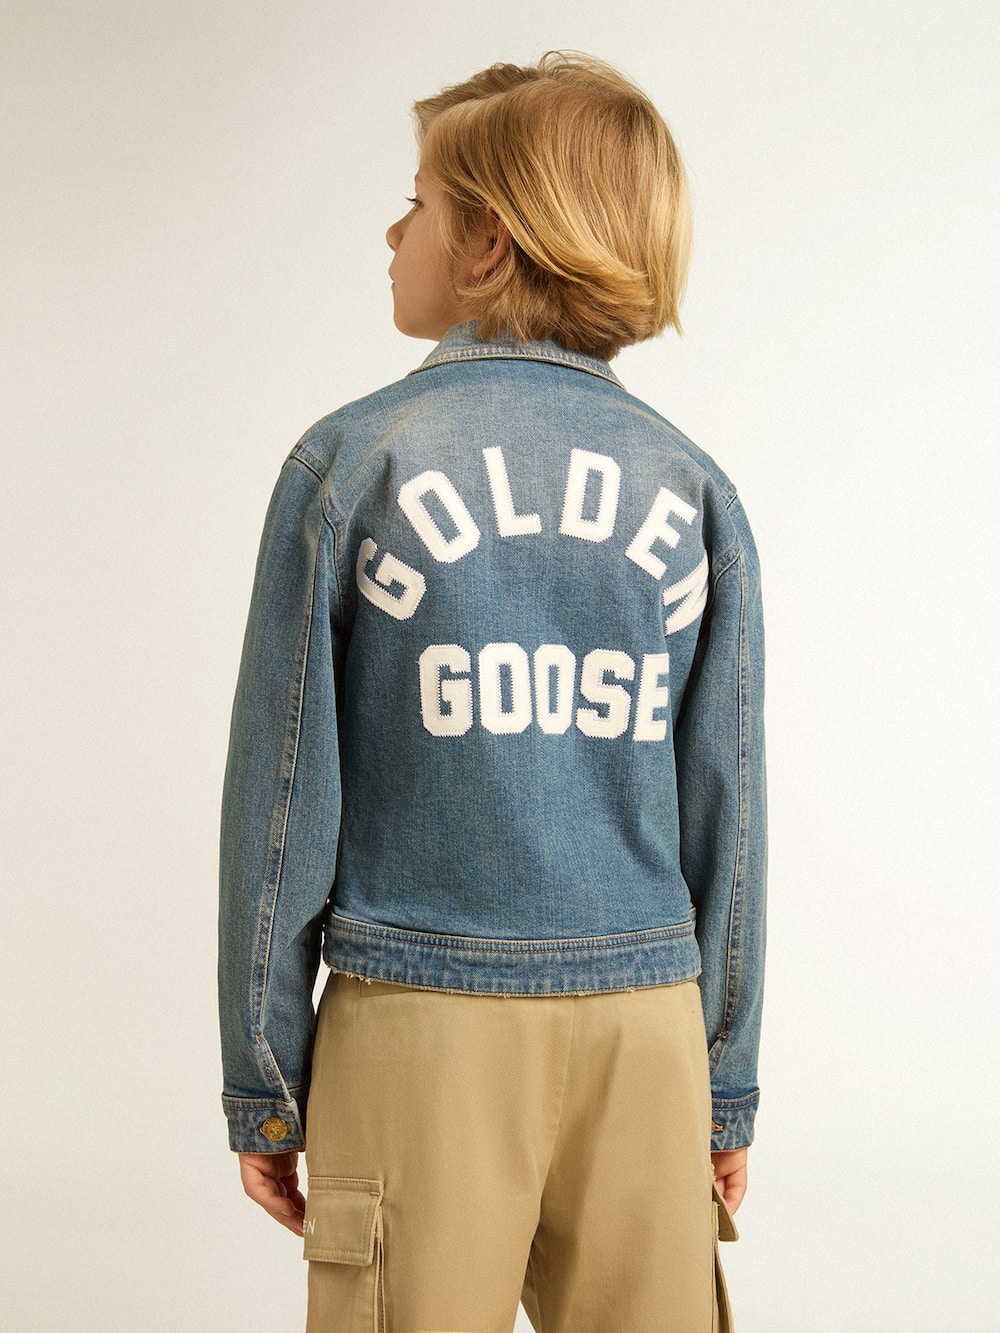 Golden Goose - Jaqueta jeans infantil masculina com lavagem média in 